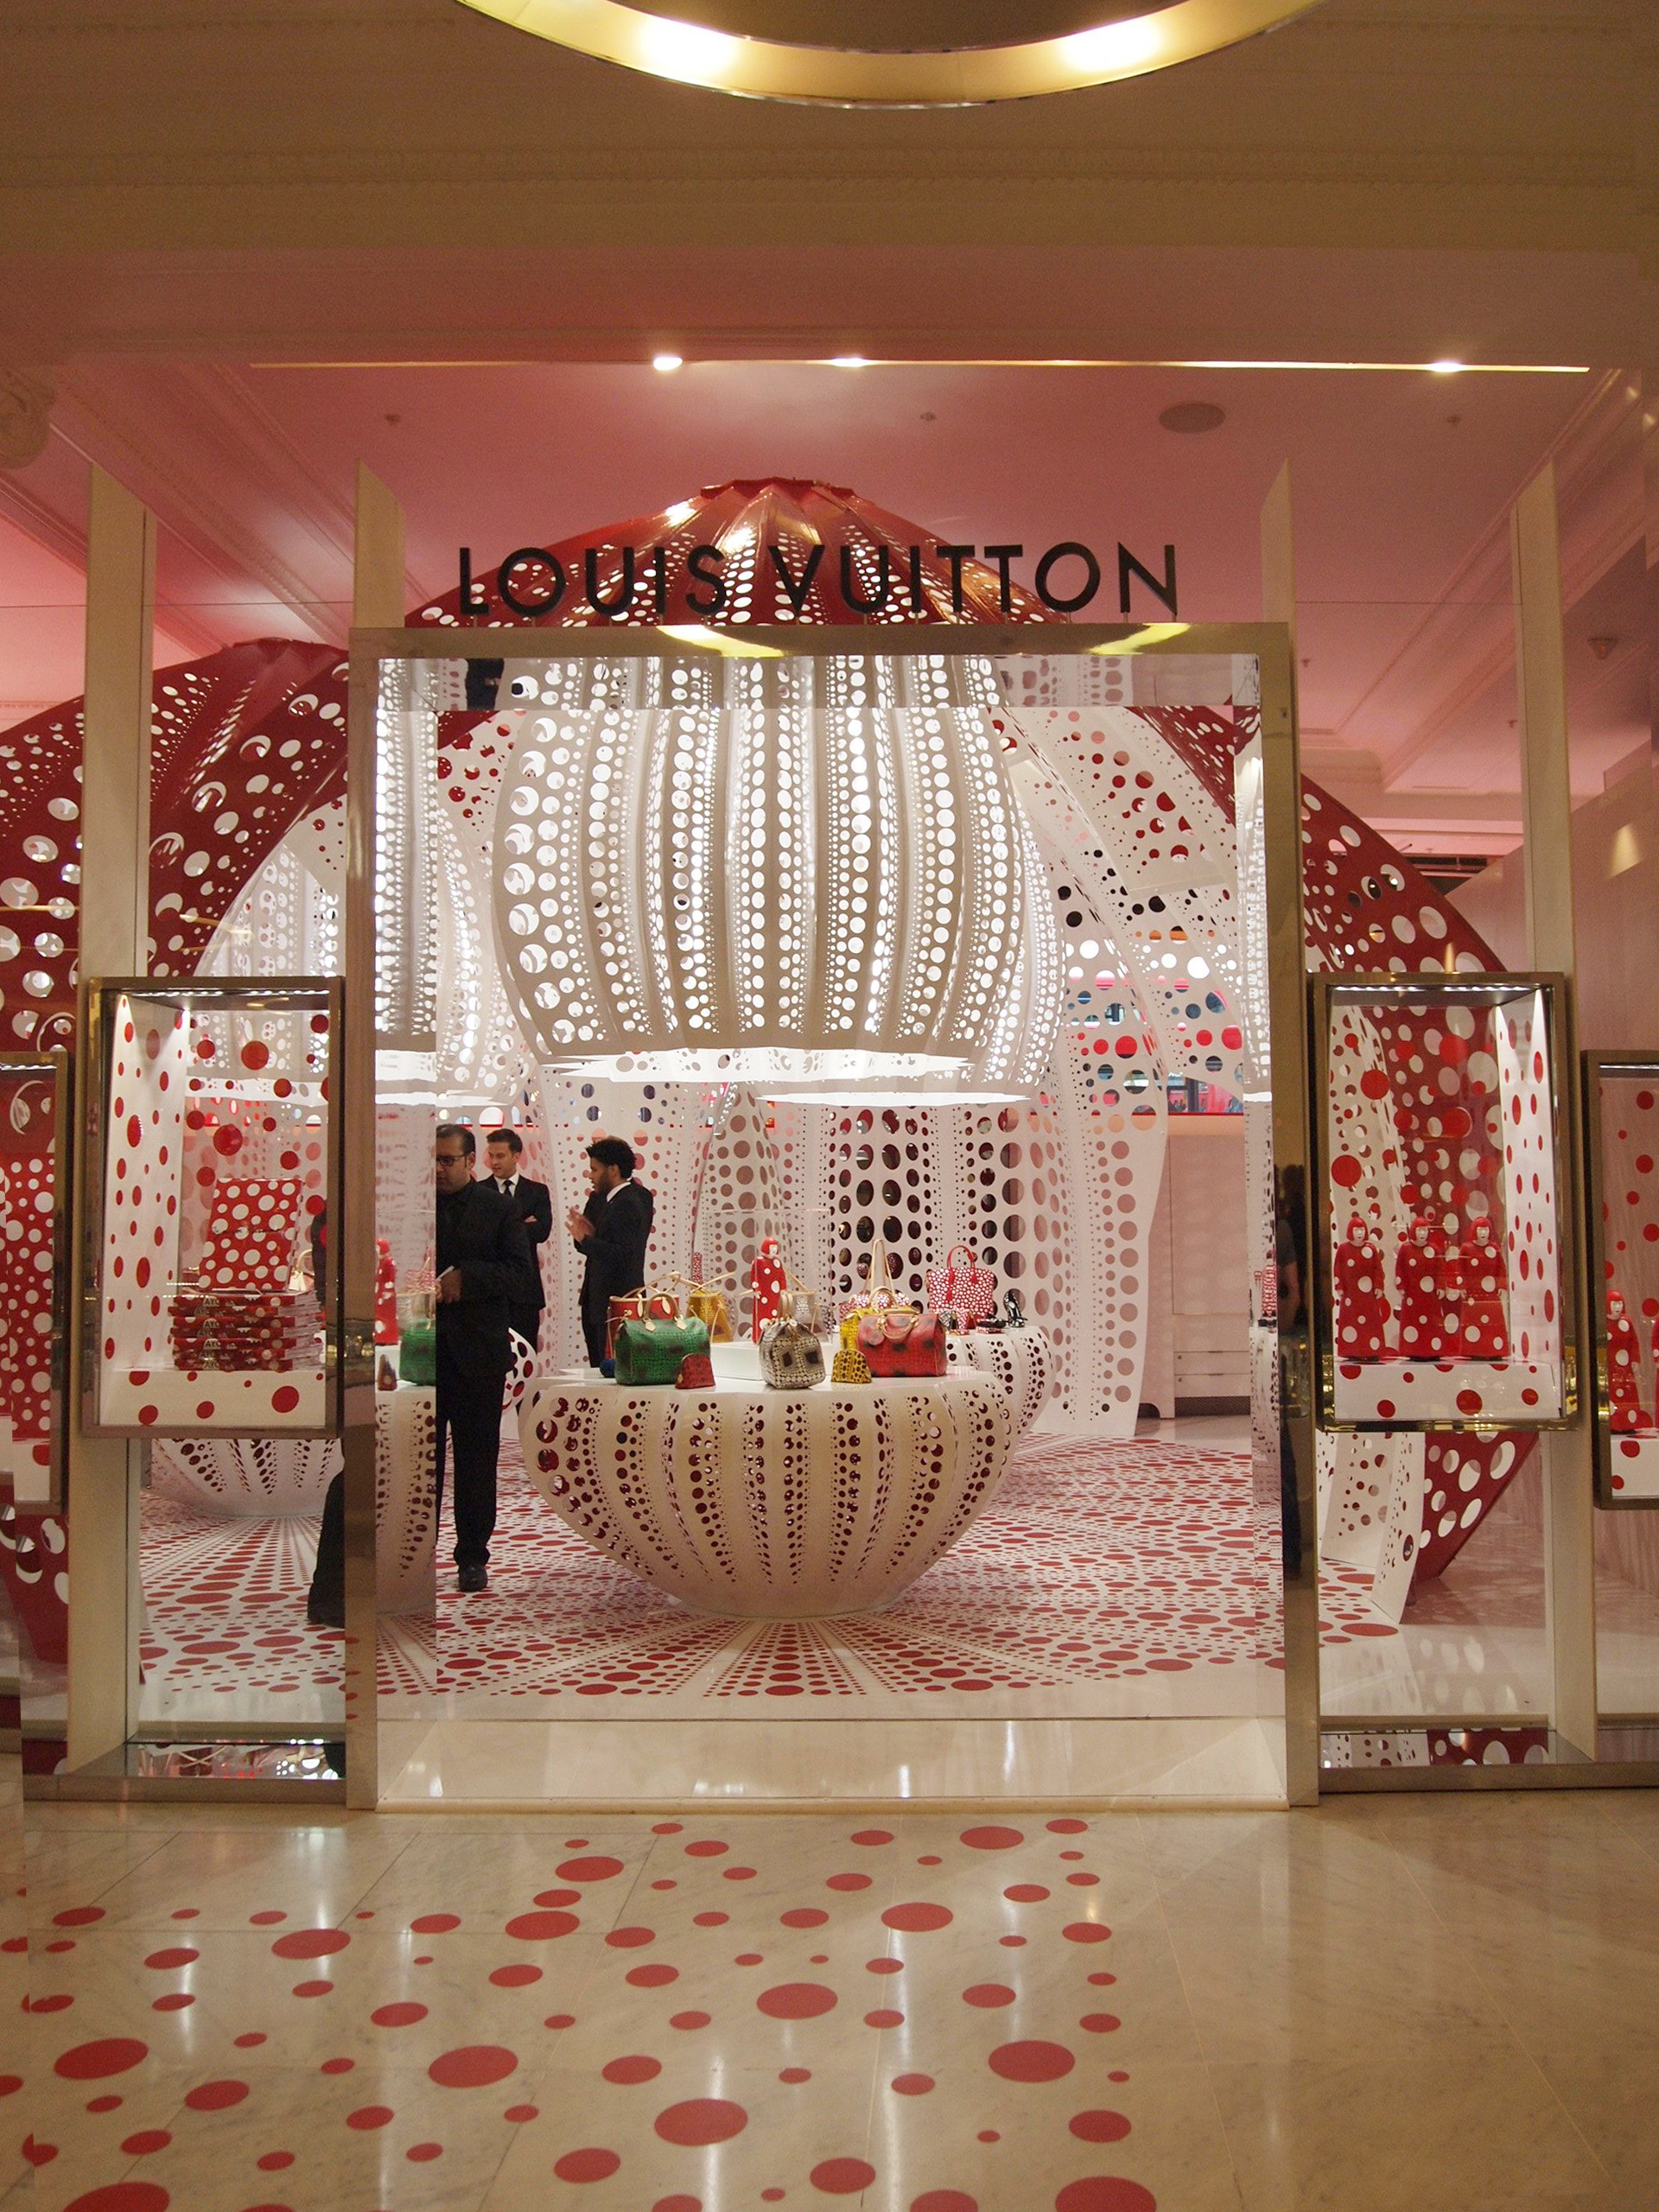 Preview the Louis Vuitton x Fragment pop-up shop at Harrods